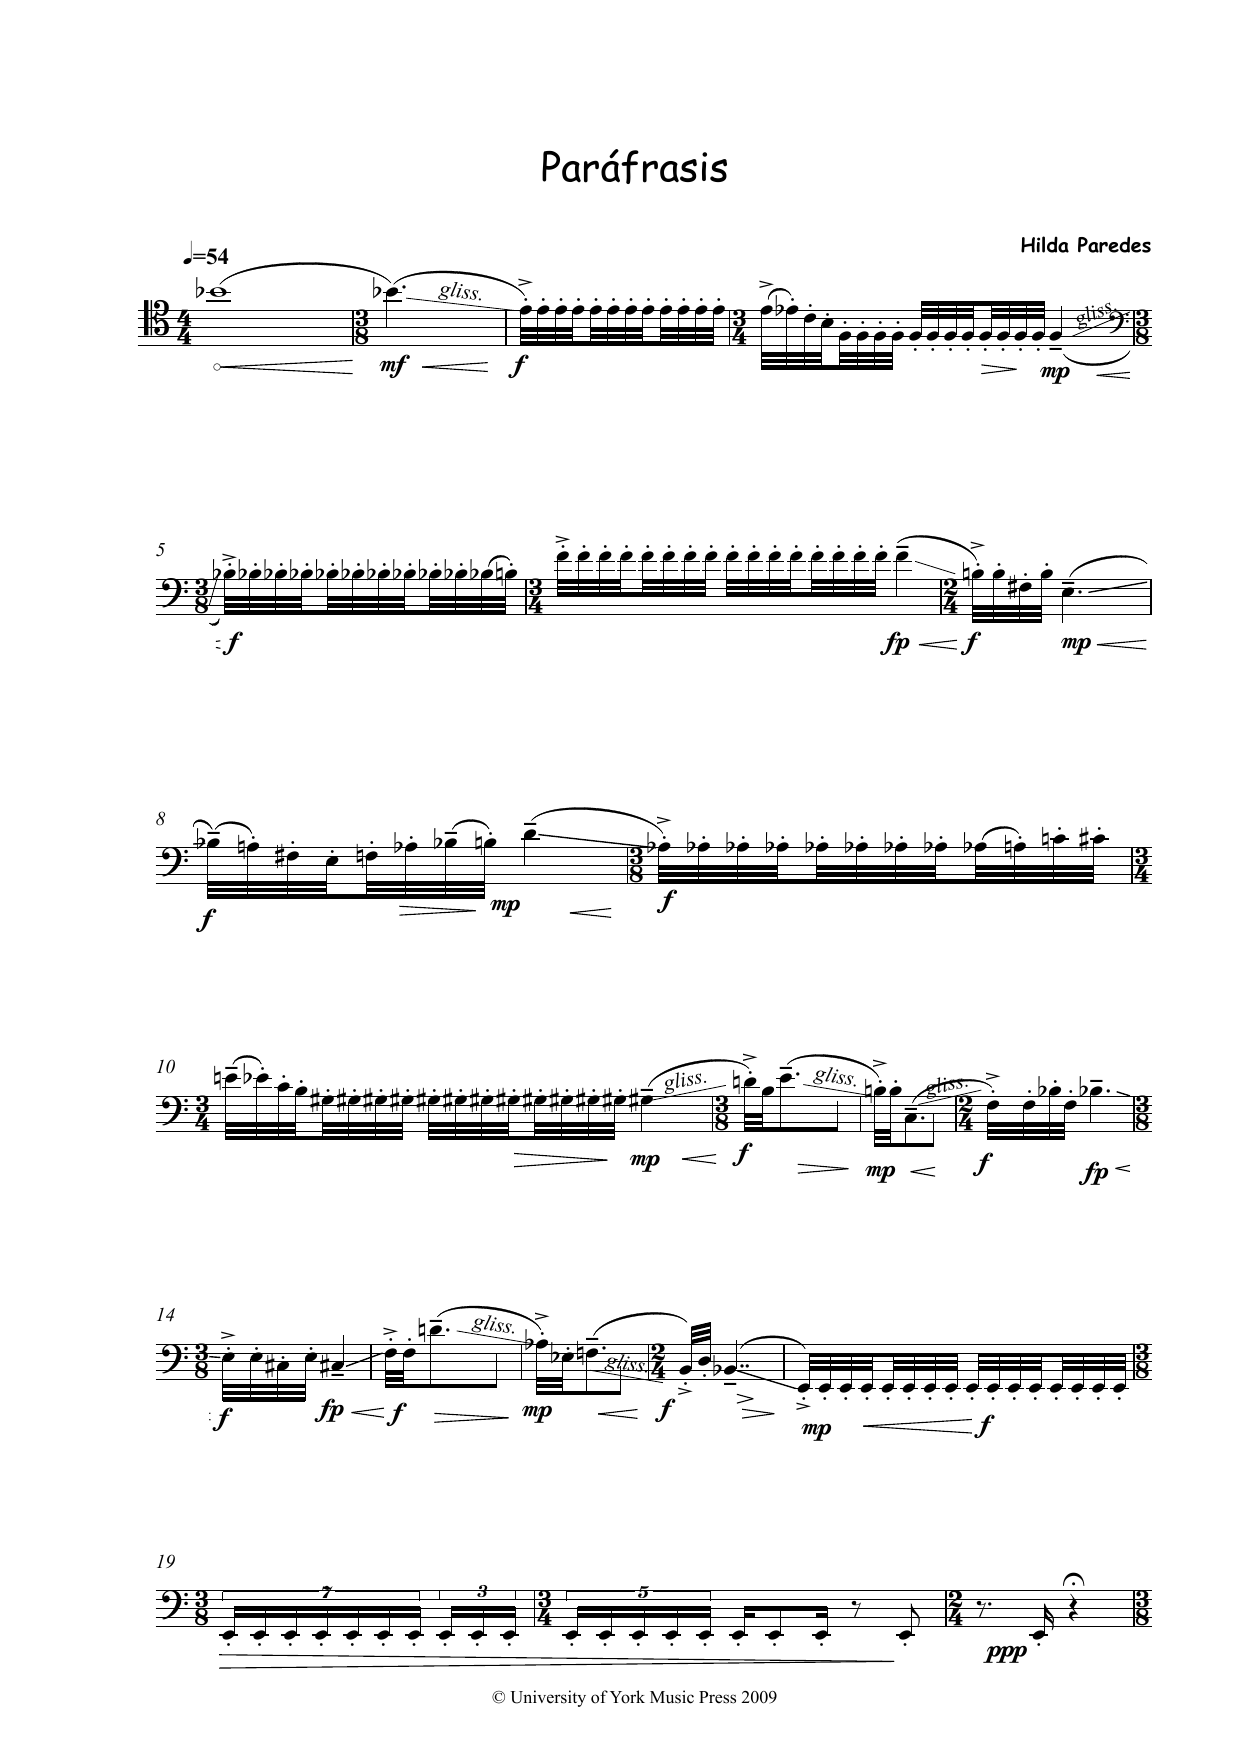 Hilda Paredes Parafrasis Sheet Music Notes & Chords for Trombone - Download or Print PDF